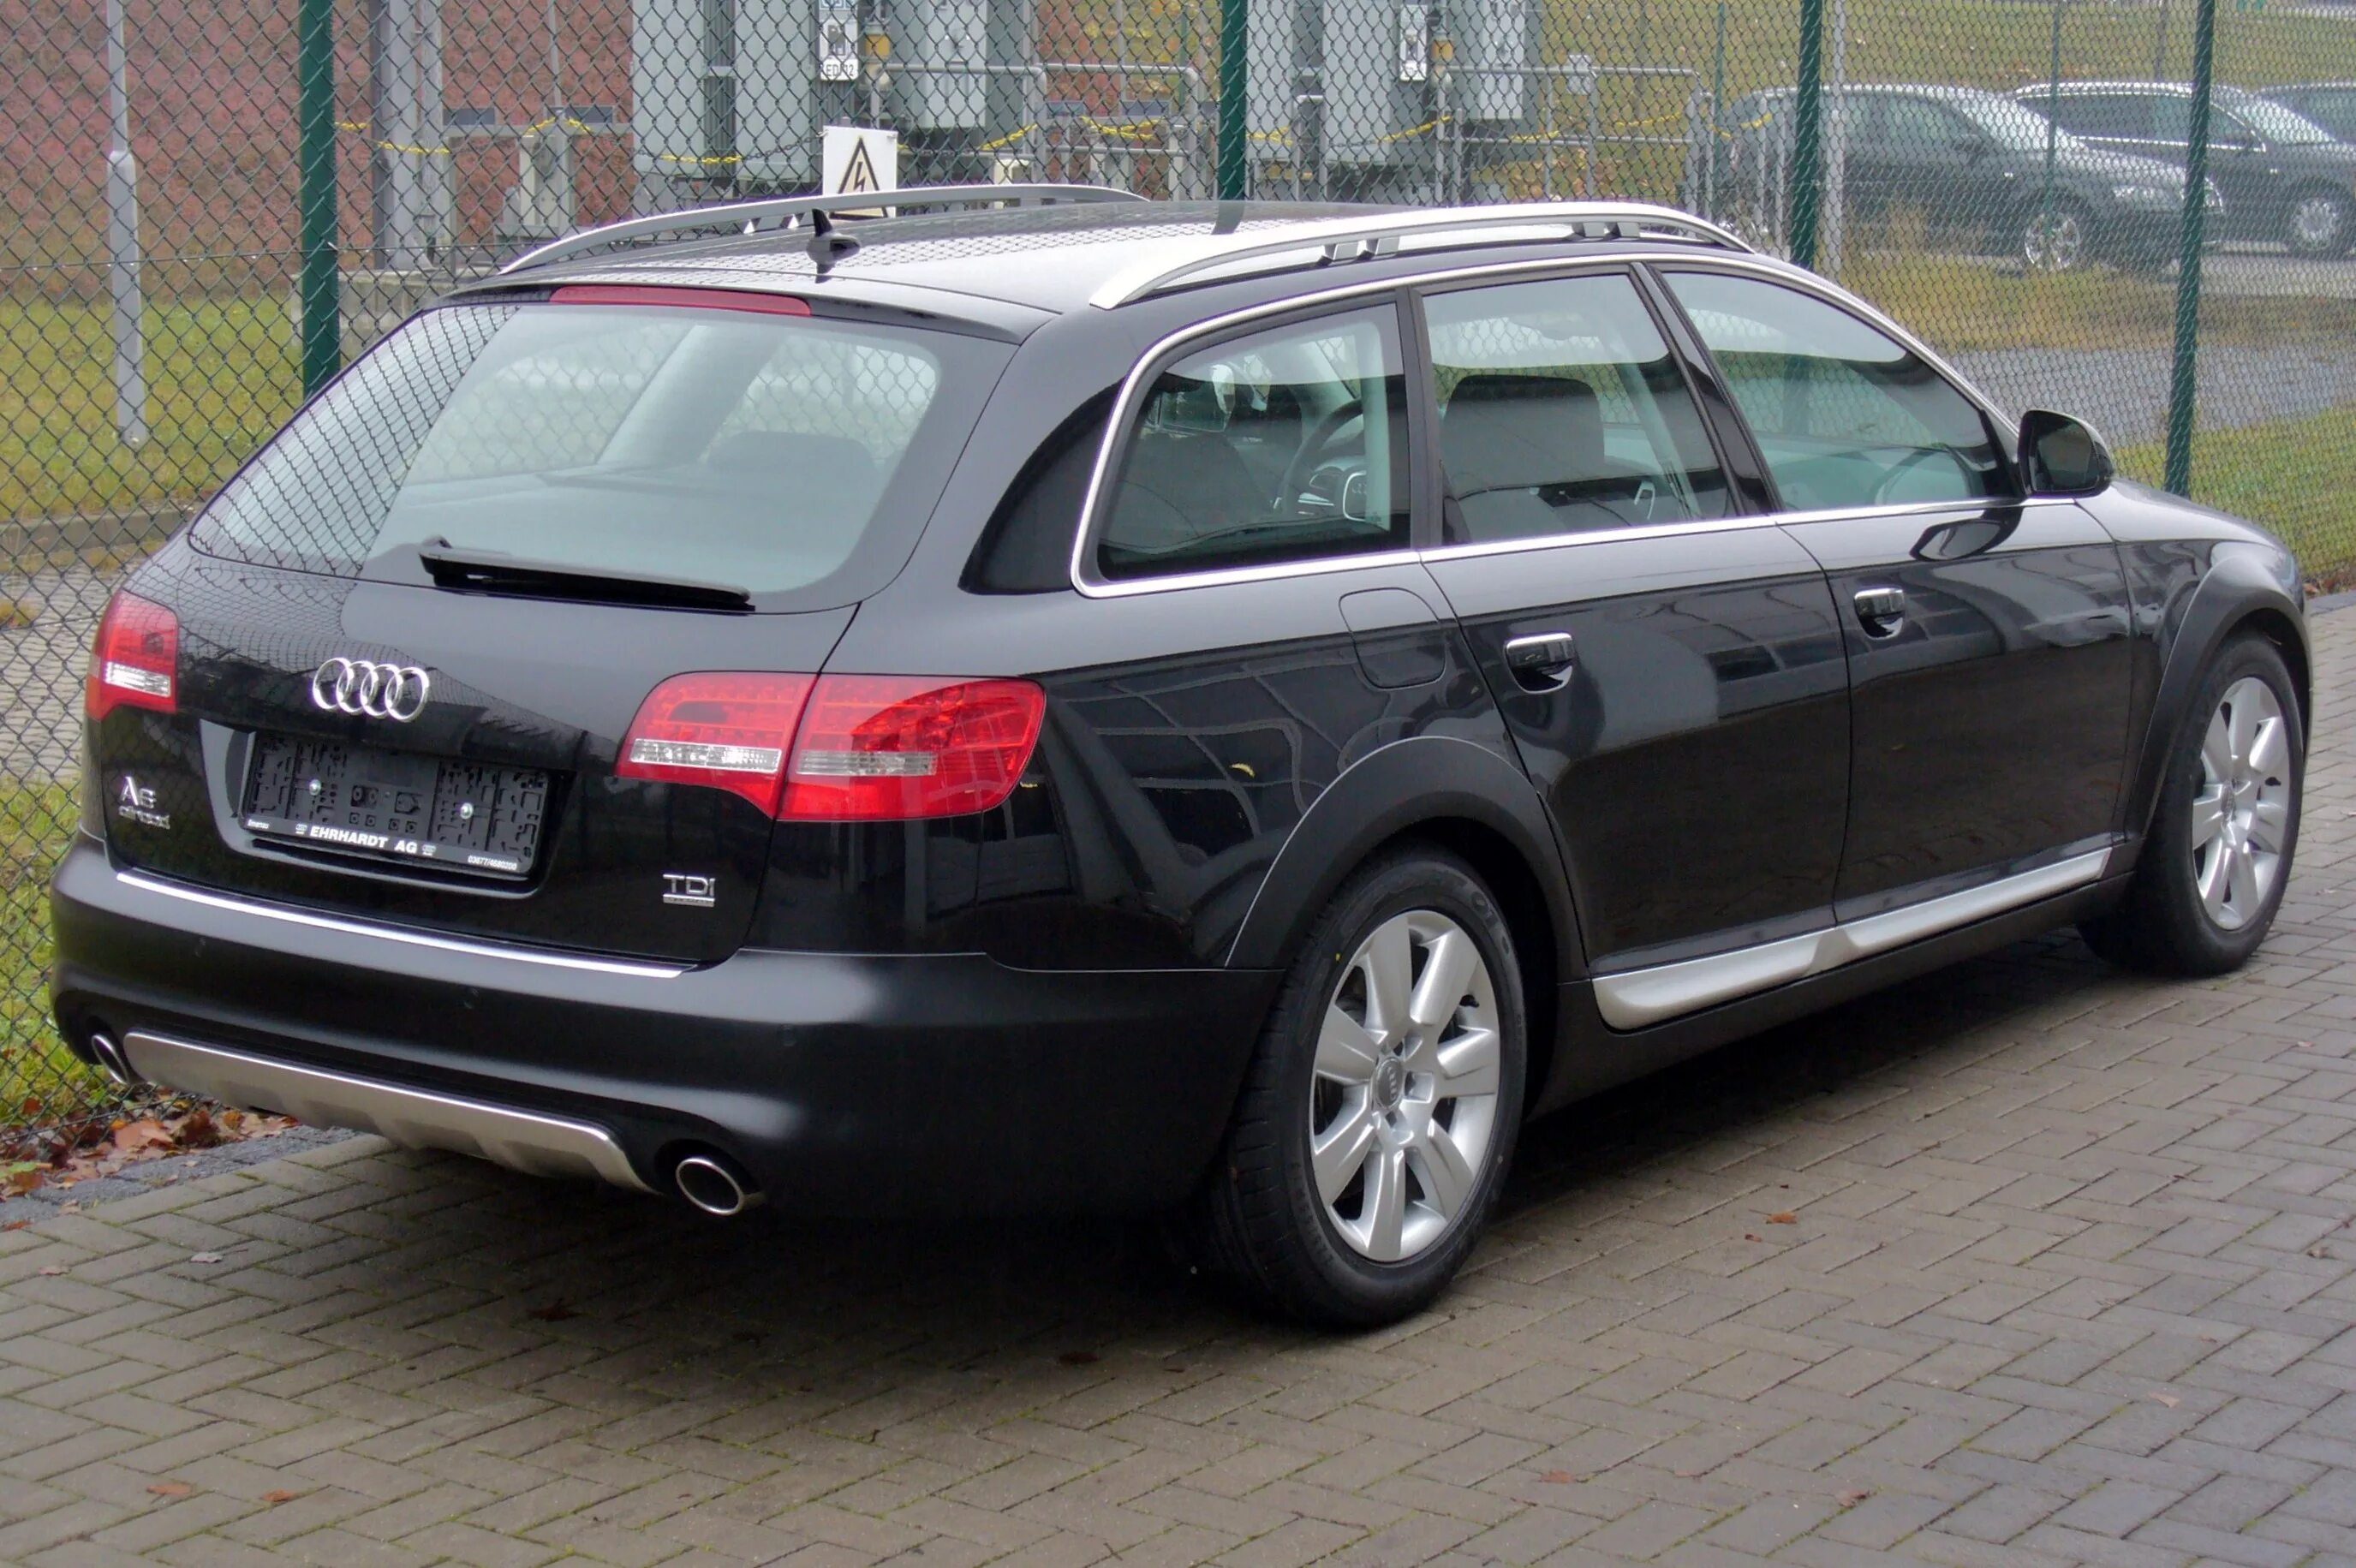 A6 c6 3.0 tdi. Ауди а6 кватро универсал 2008. Ауди а6 Allroad quattro 2008. Audi a6 Allroad 2008. Audi a6 Allroad с6.